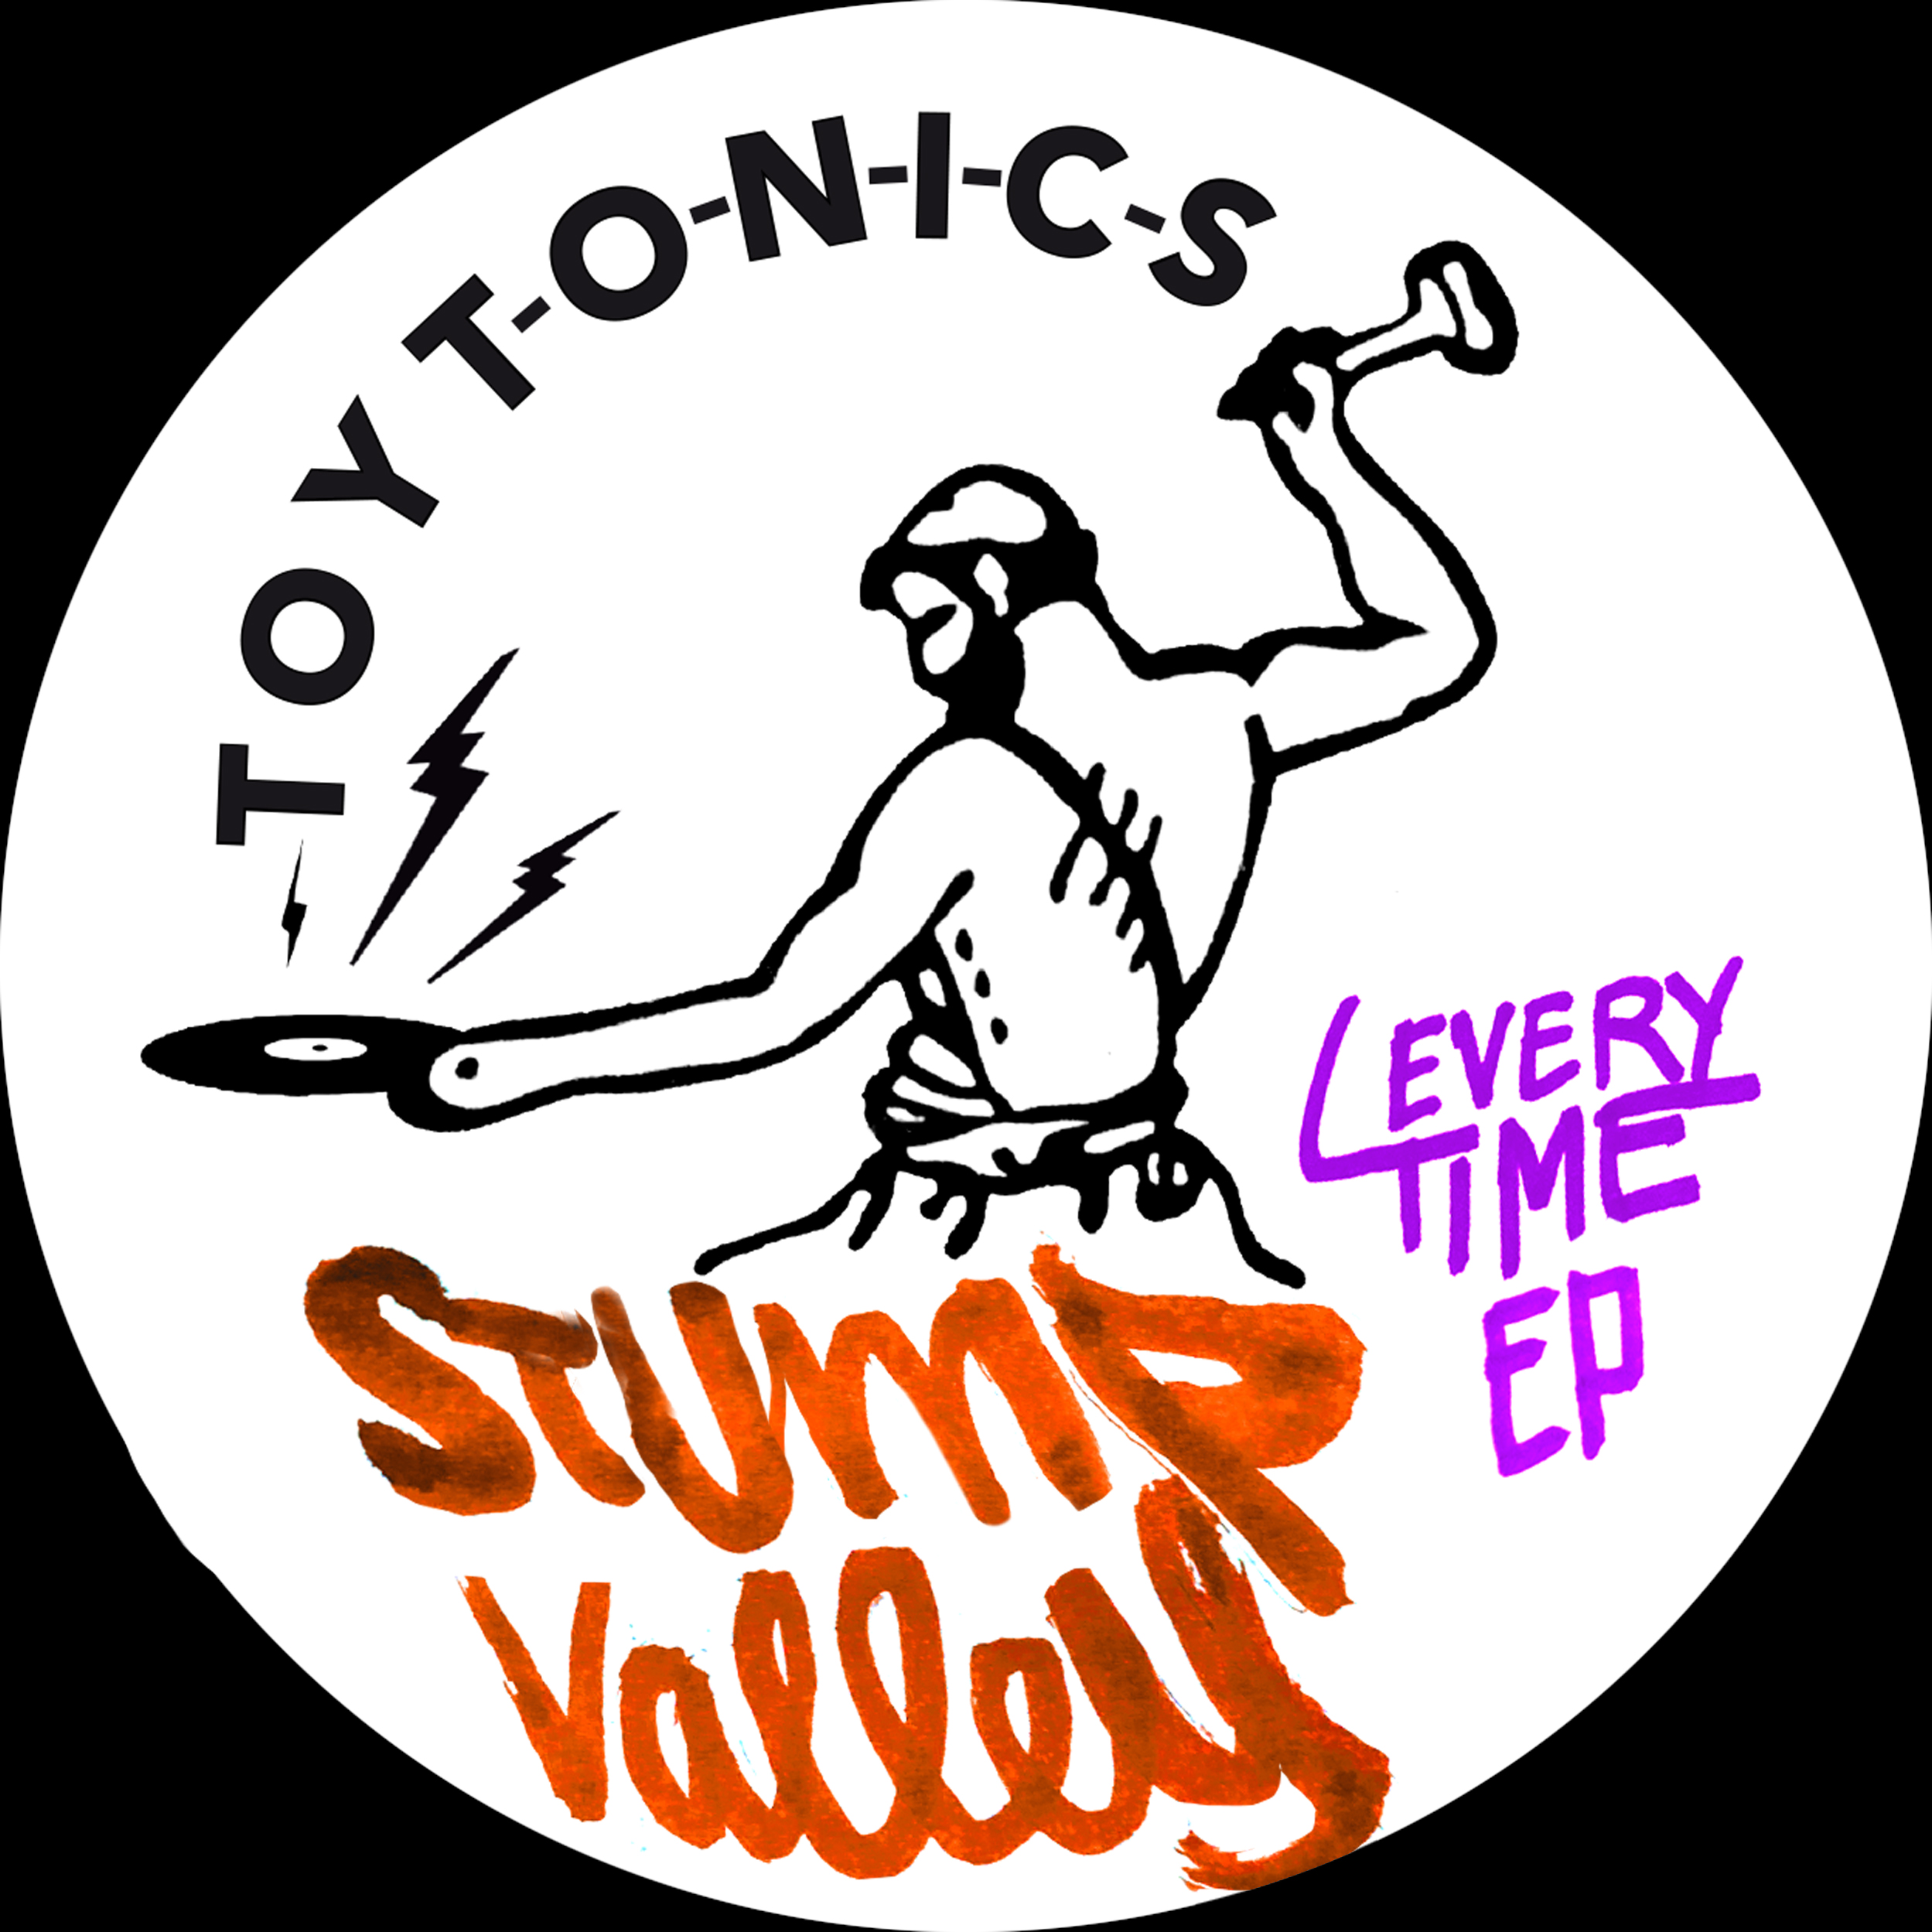 Stump Valley – Everytime EP [TOYT158]